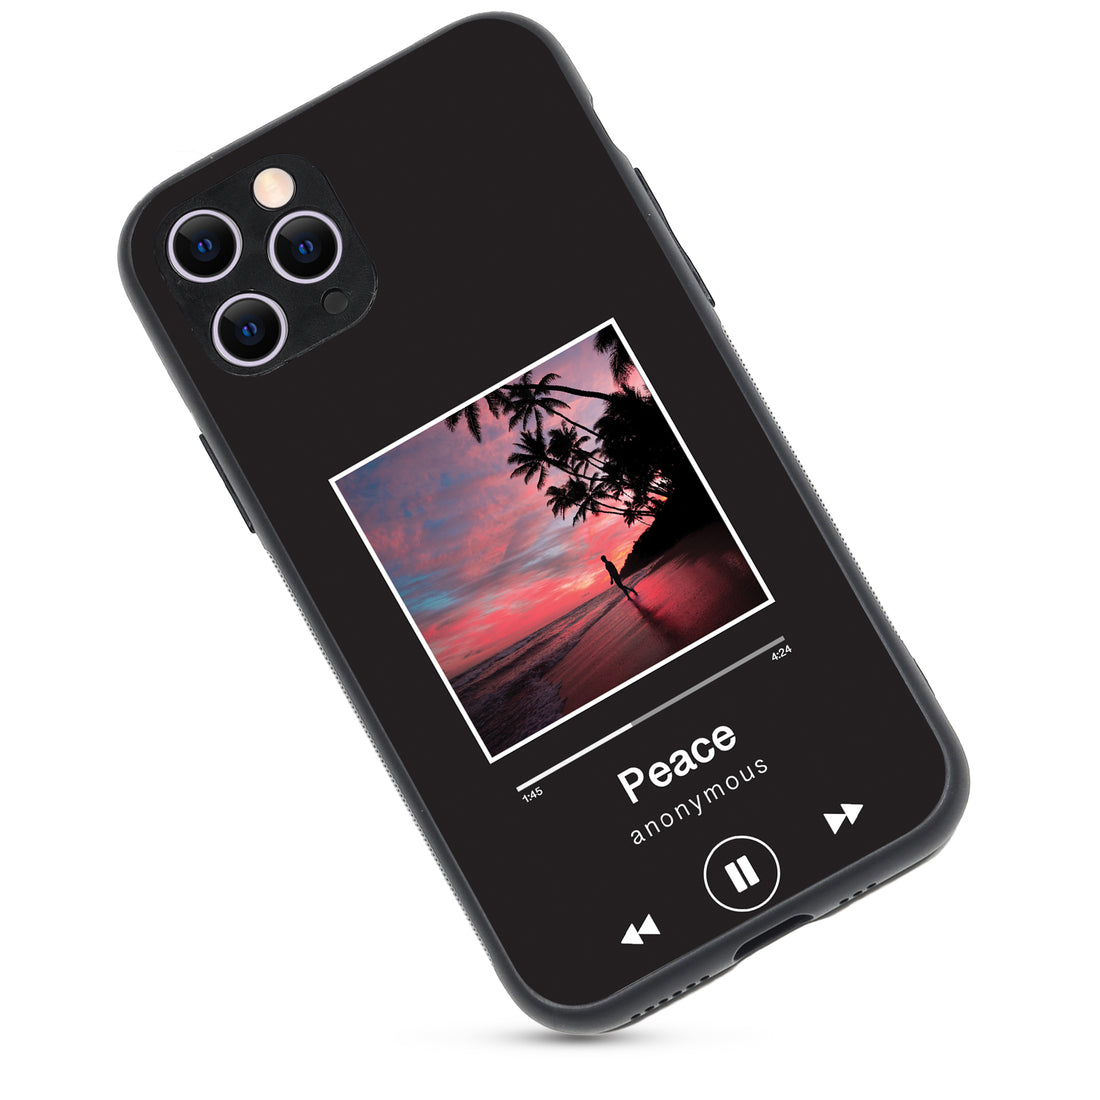 Peace Music iPhone 11 Pro Case